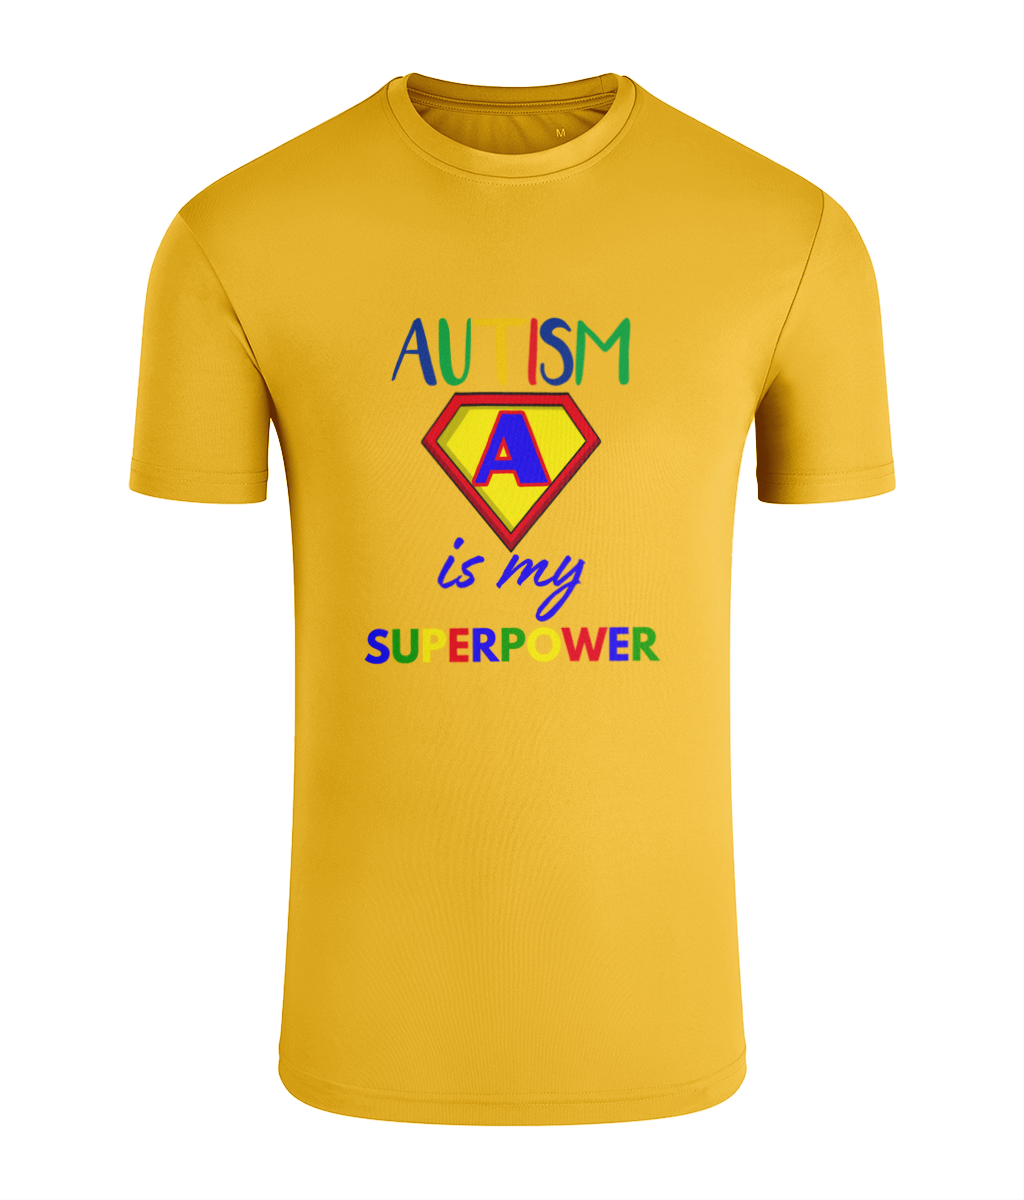 Autism is my superpower kids children's t-shirt summer clothing